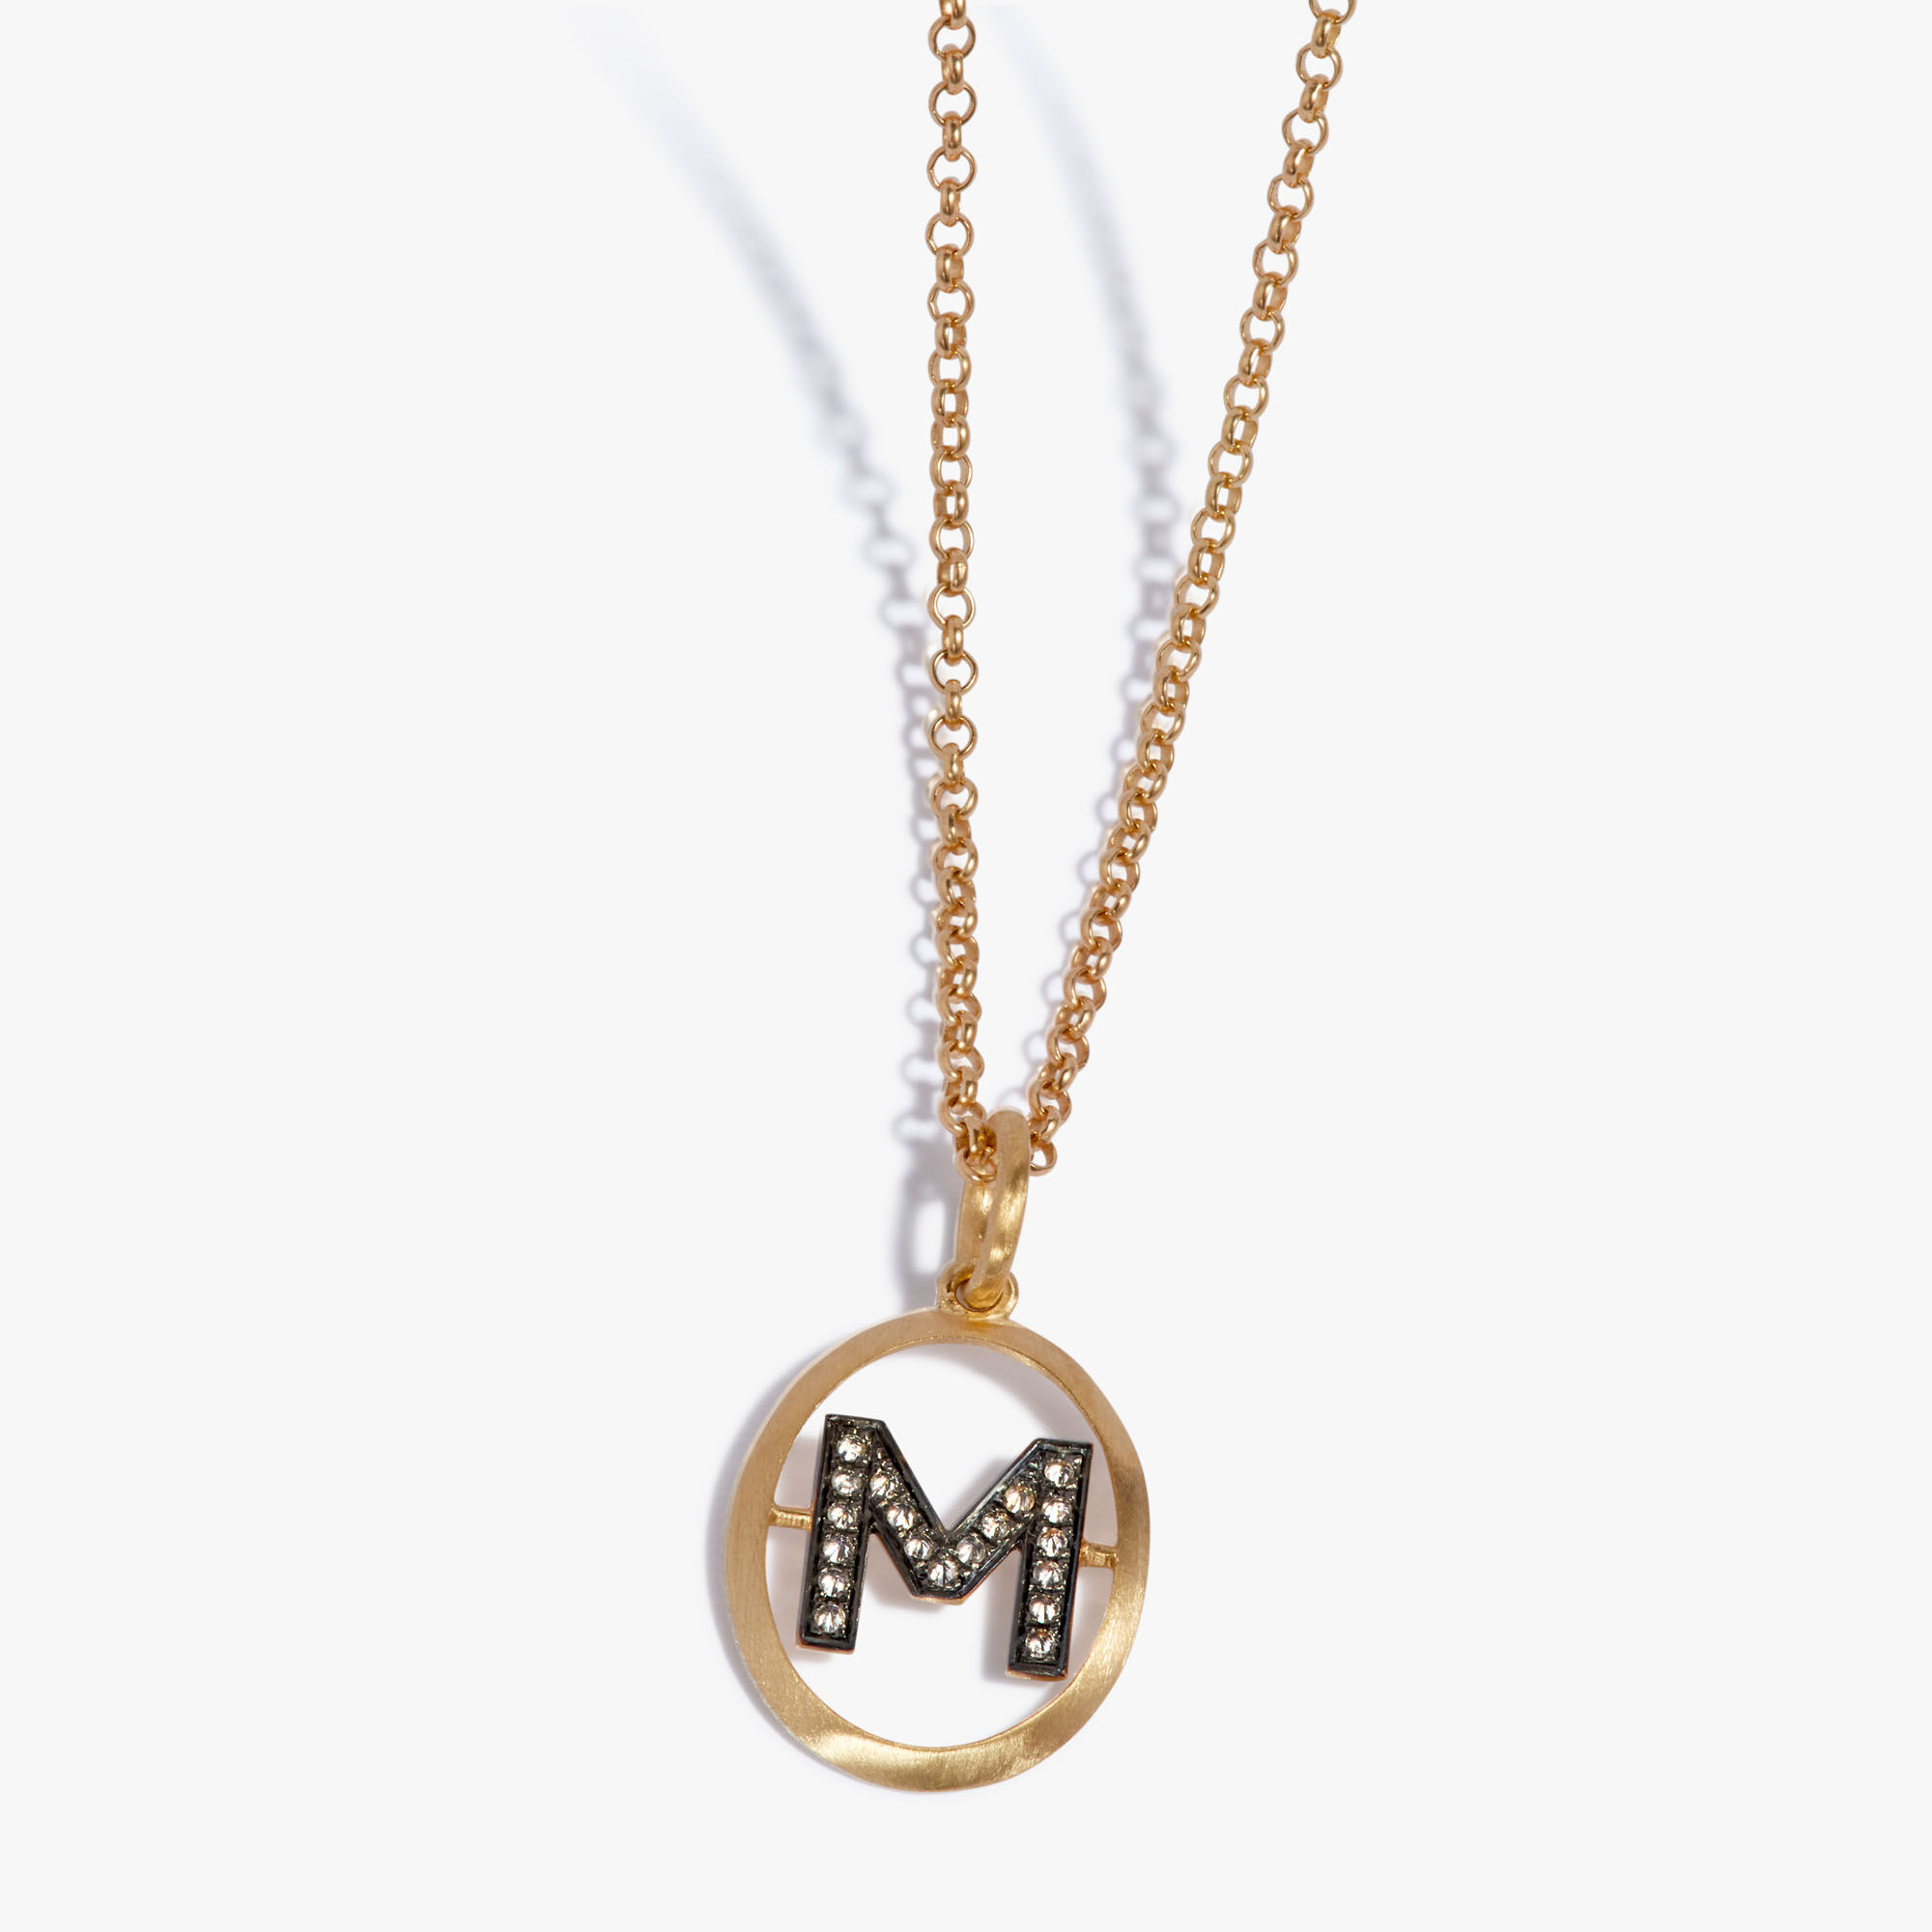 Gold Letter M Necklace